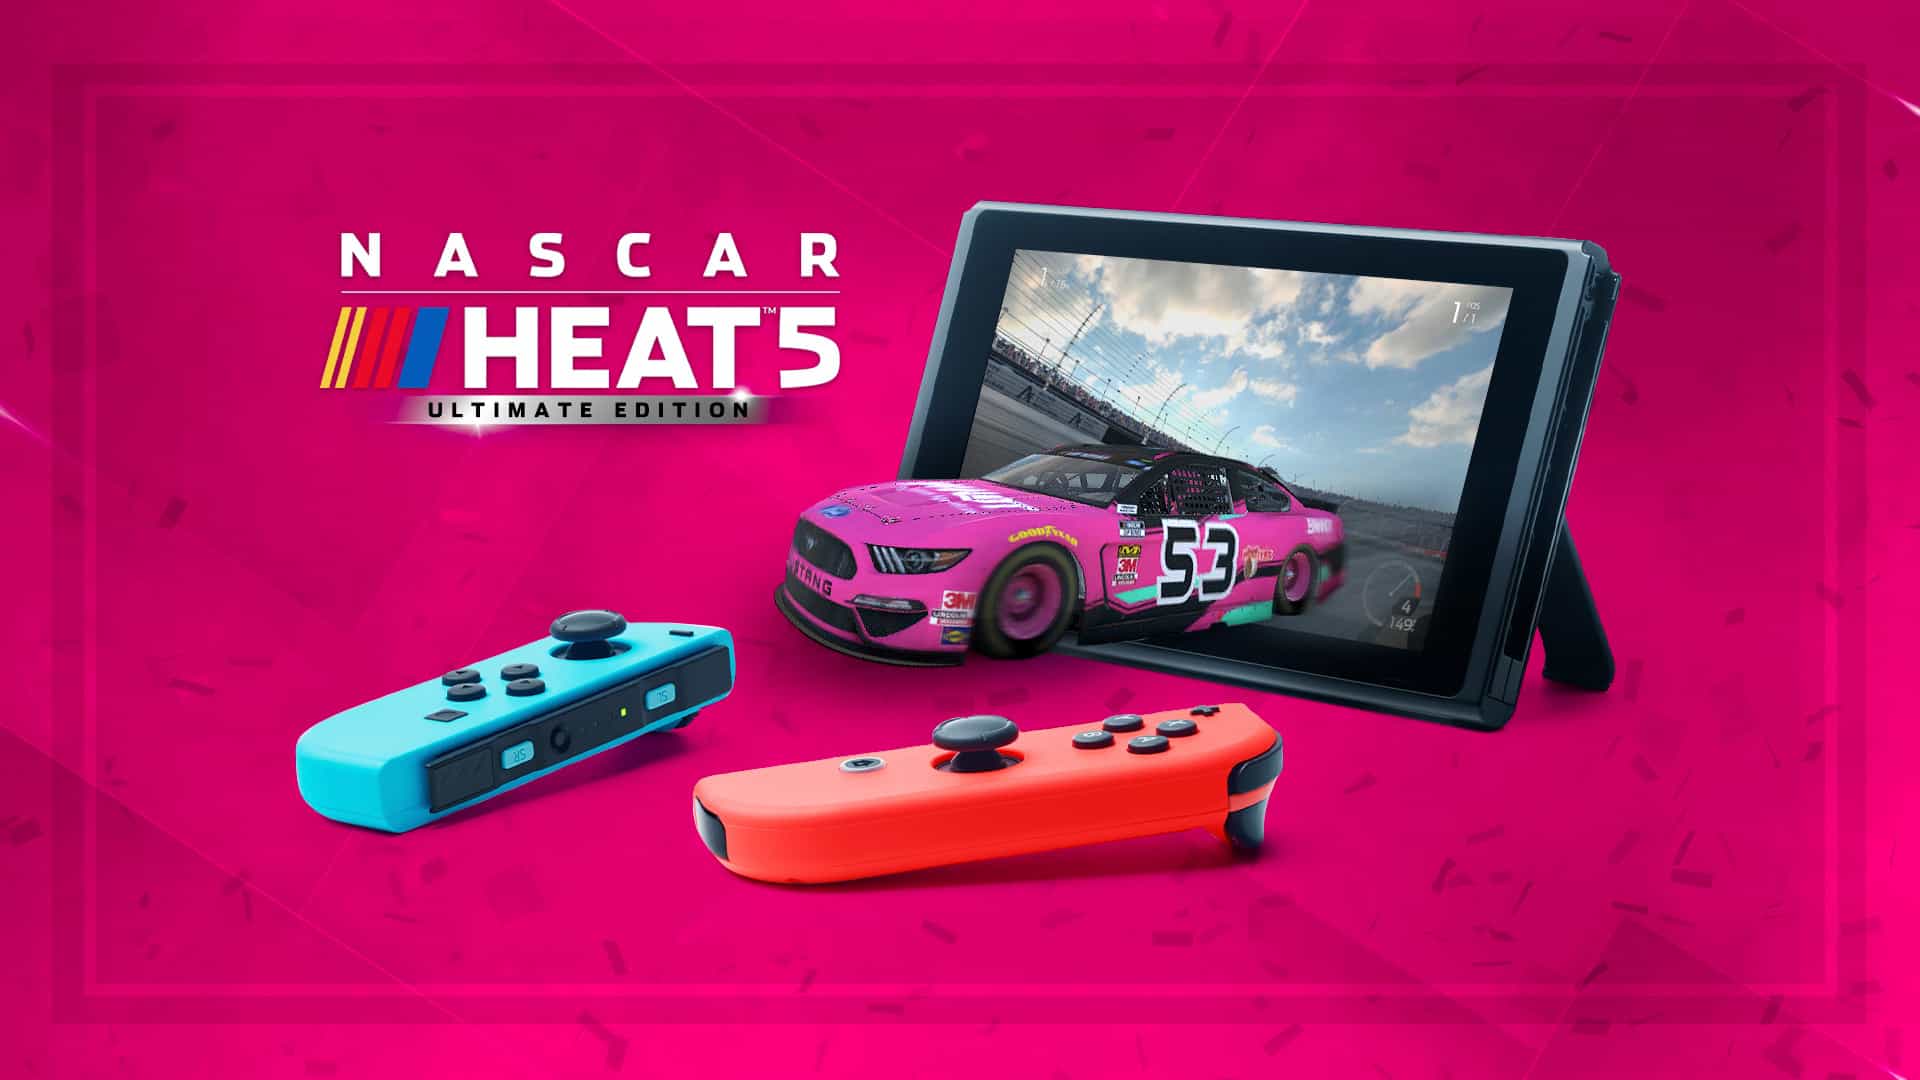 NASCAR Heat: Ultimate Edition + - Nintendo Switch 